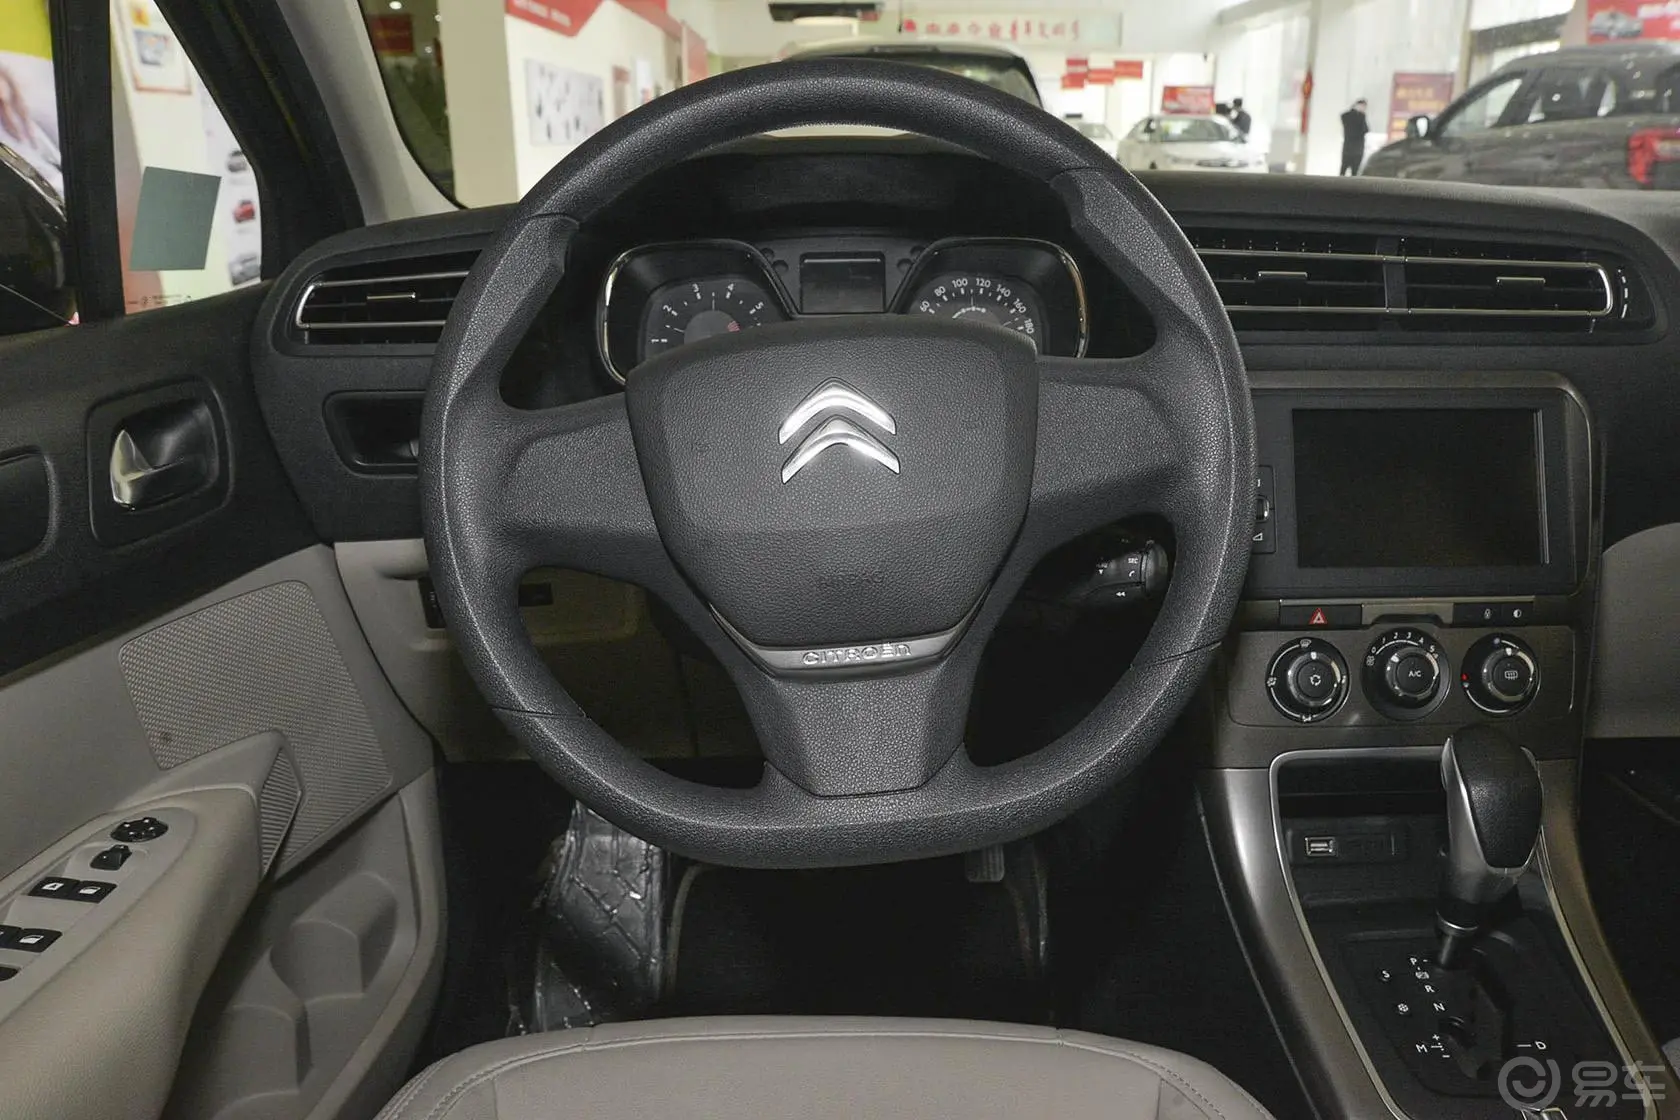 C4世嘉1.6L 自动 舒适版驾驶位区域